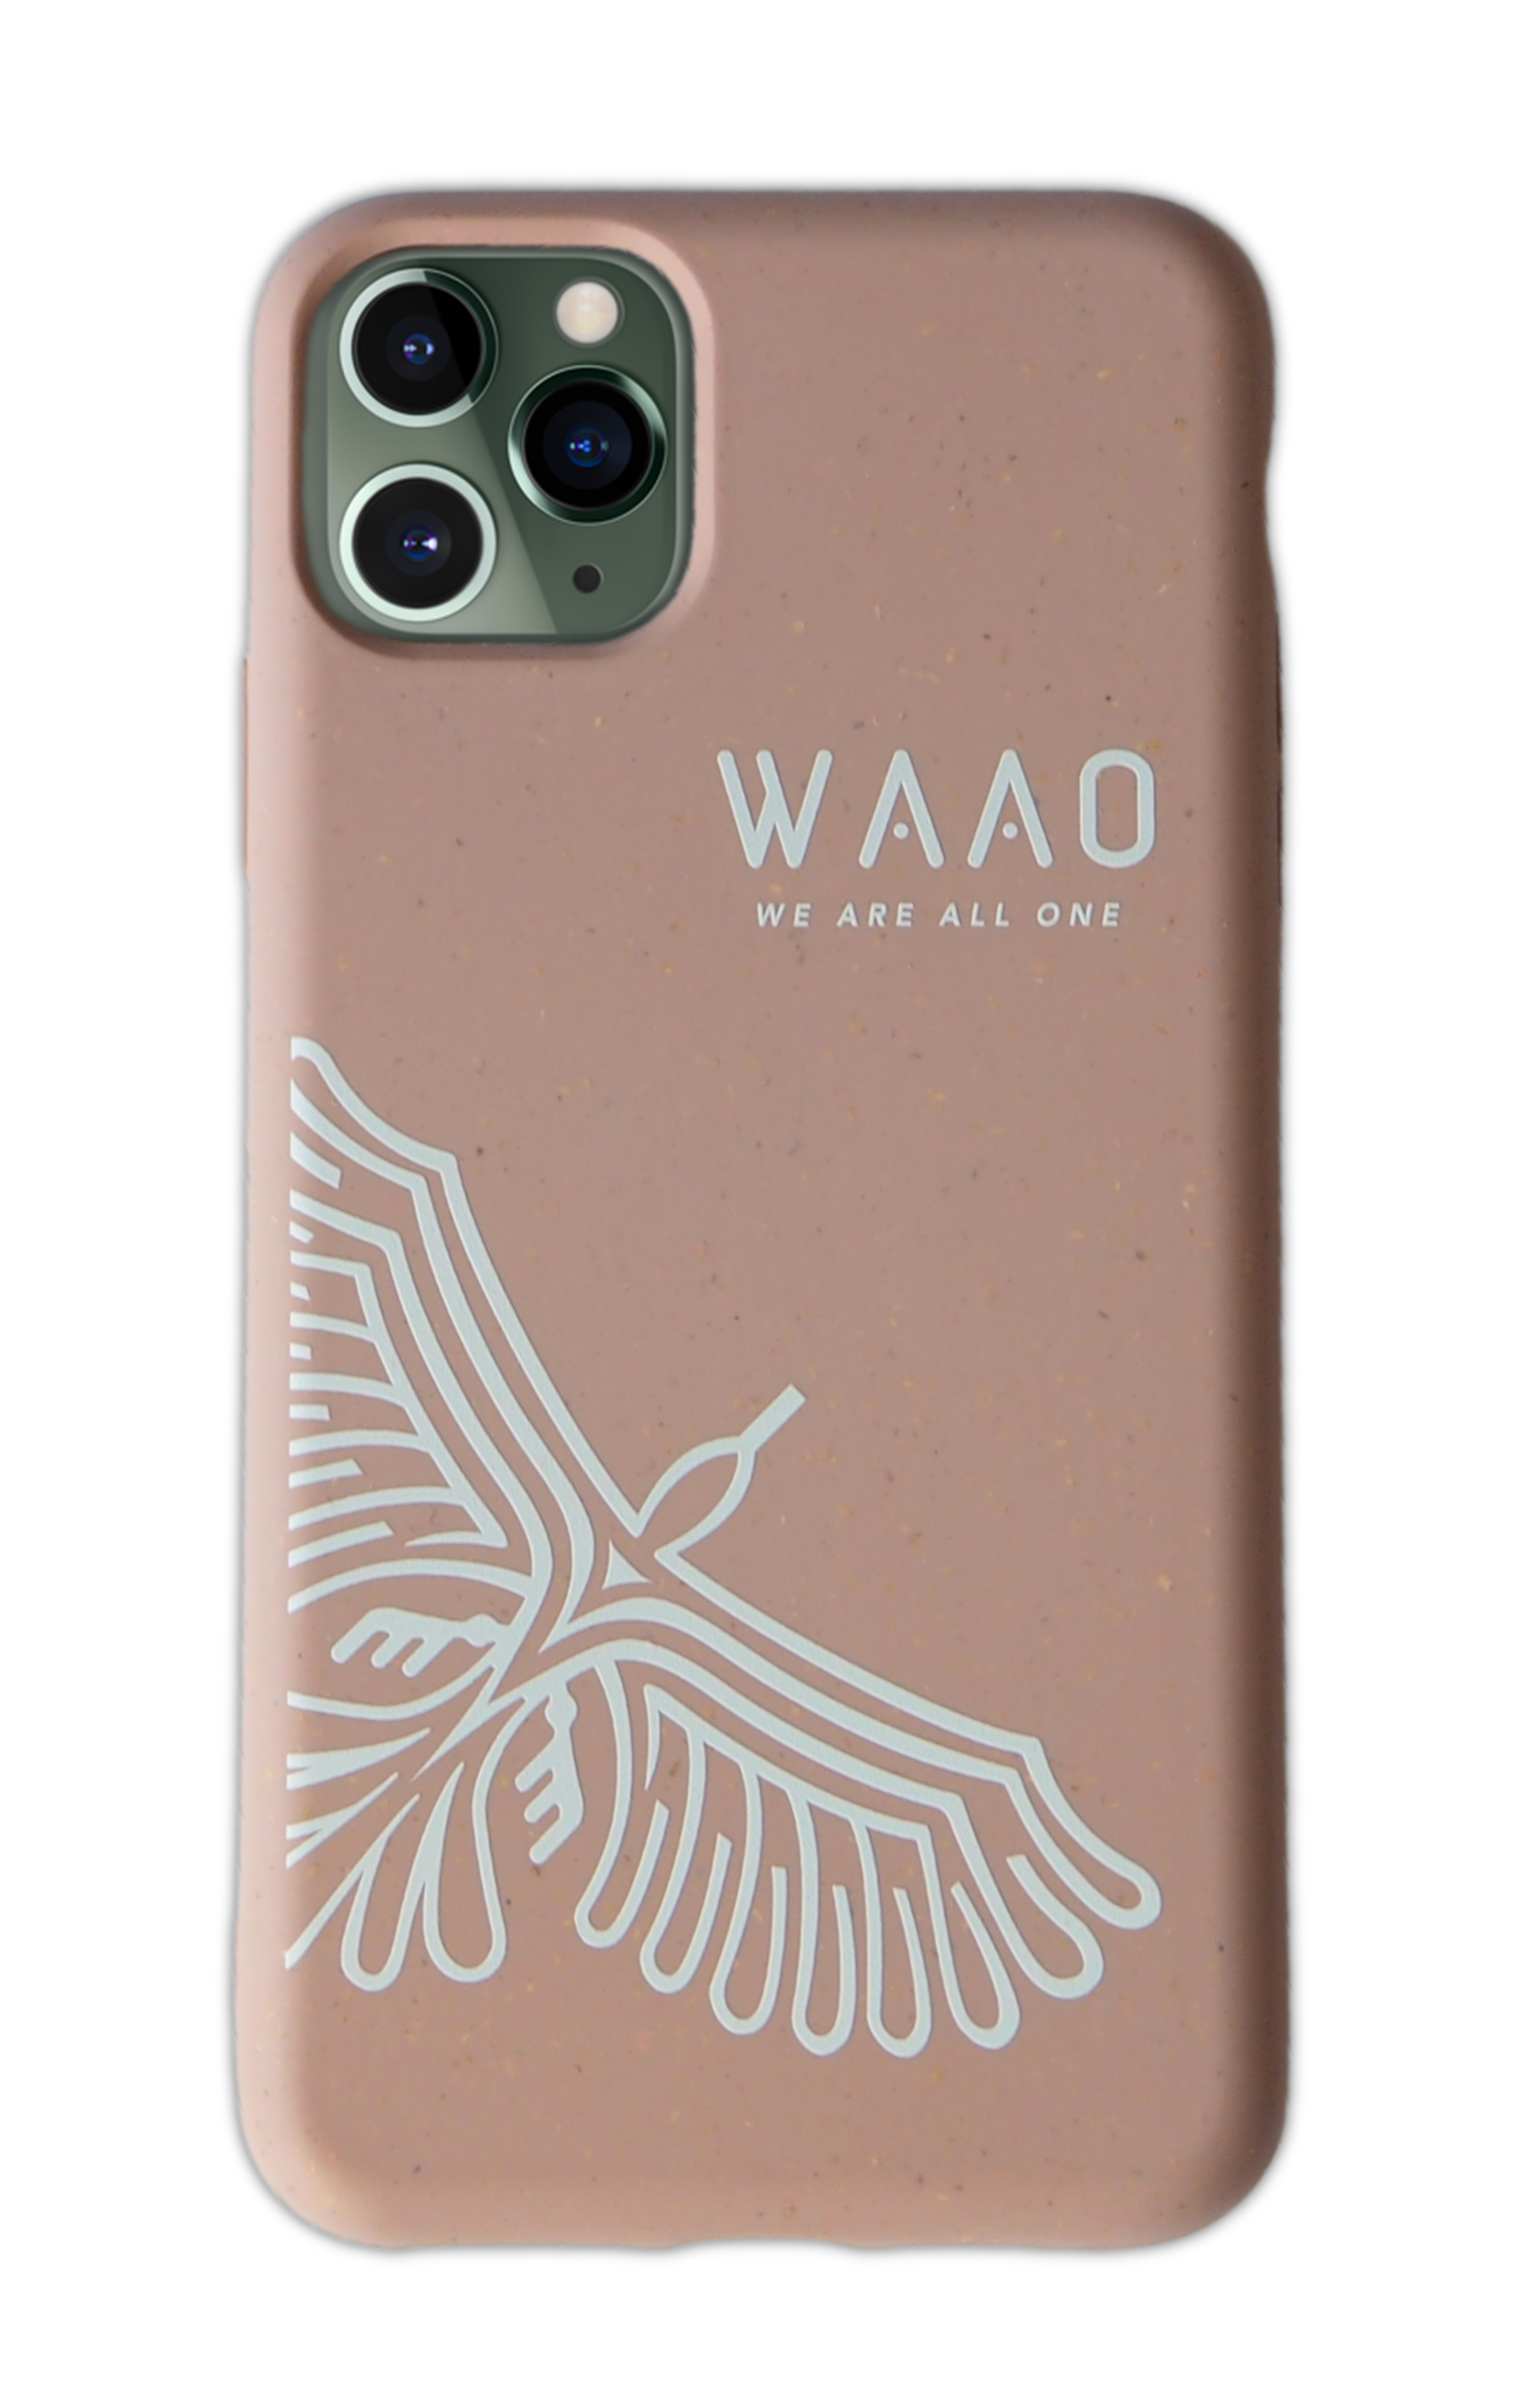 WAAO エコスマホケース - ピンク